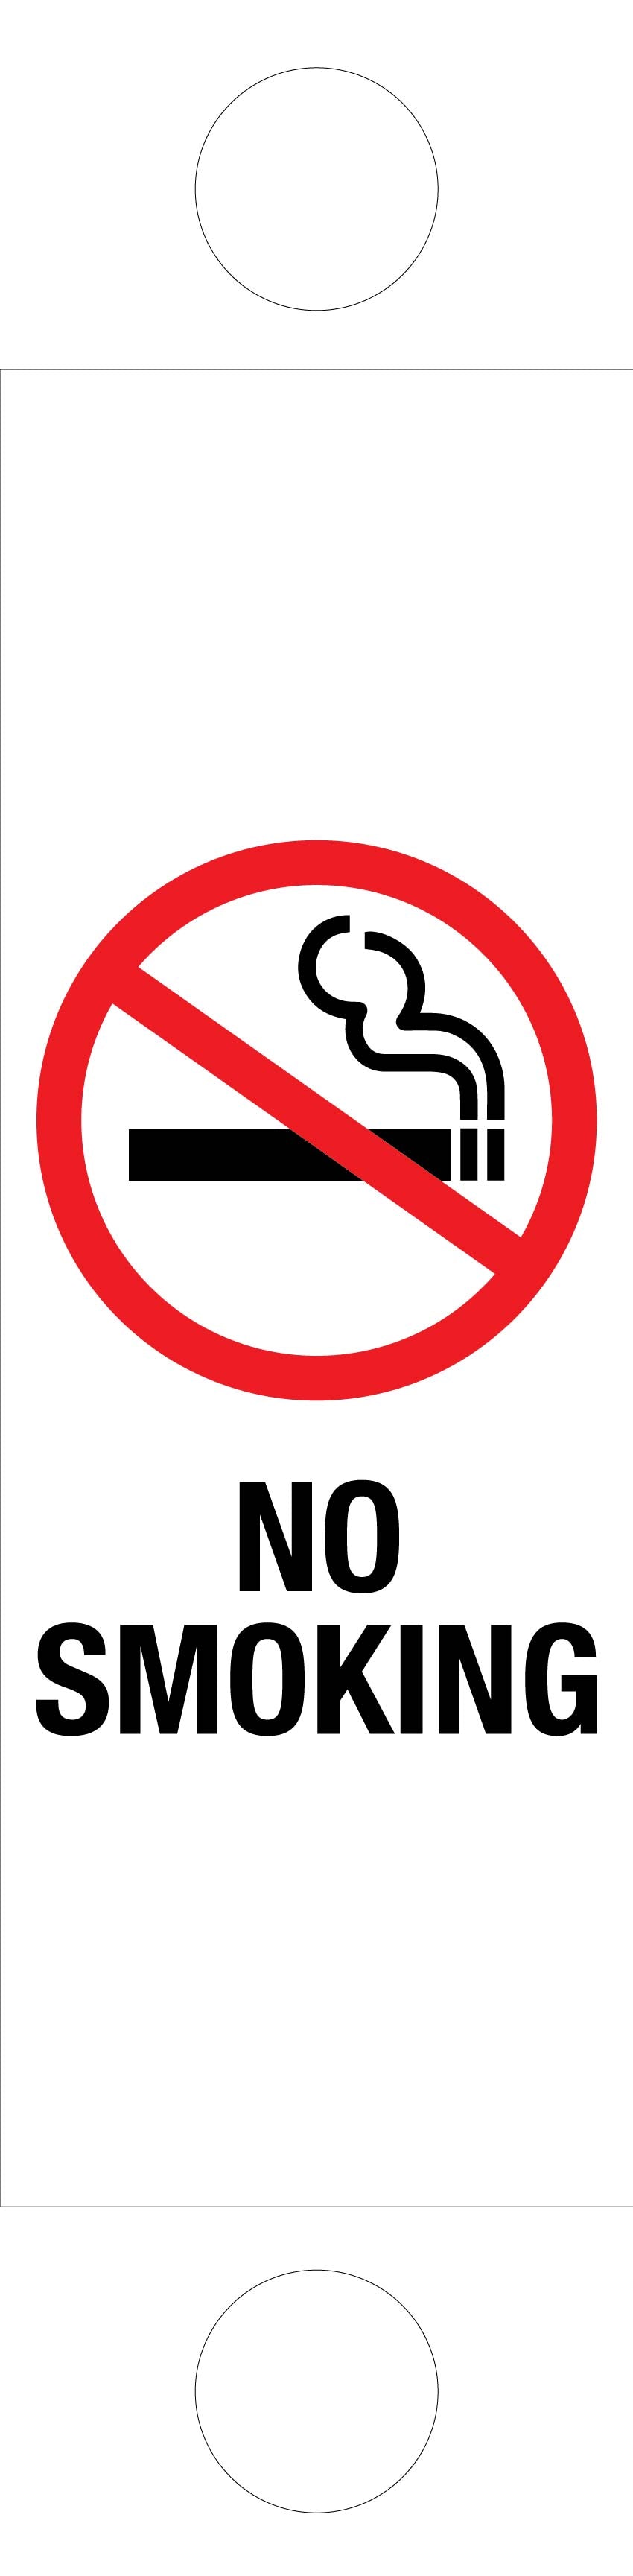 No Smoking - Corflute Bollard Traffic Signs